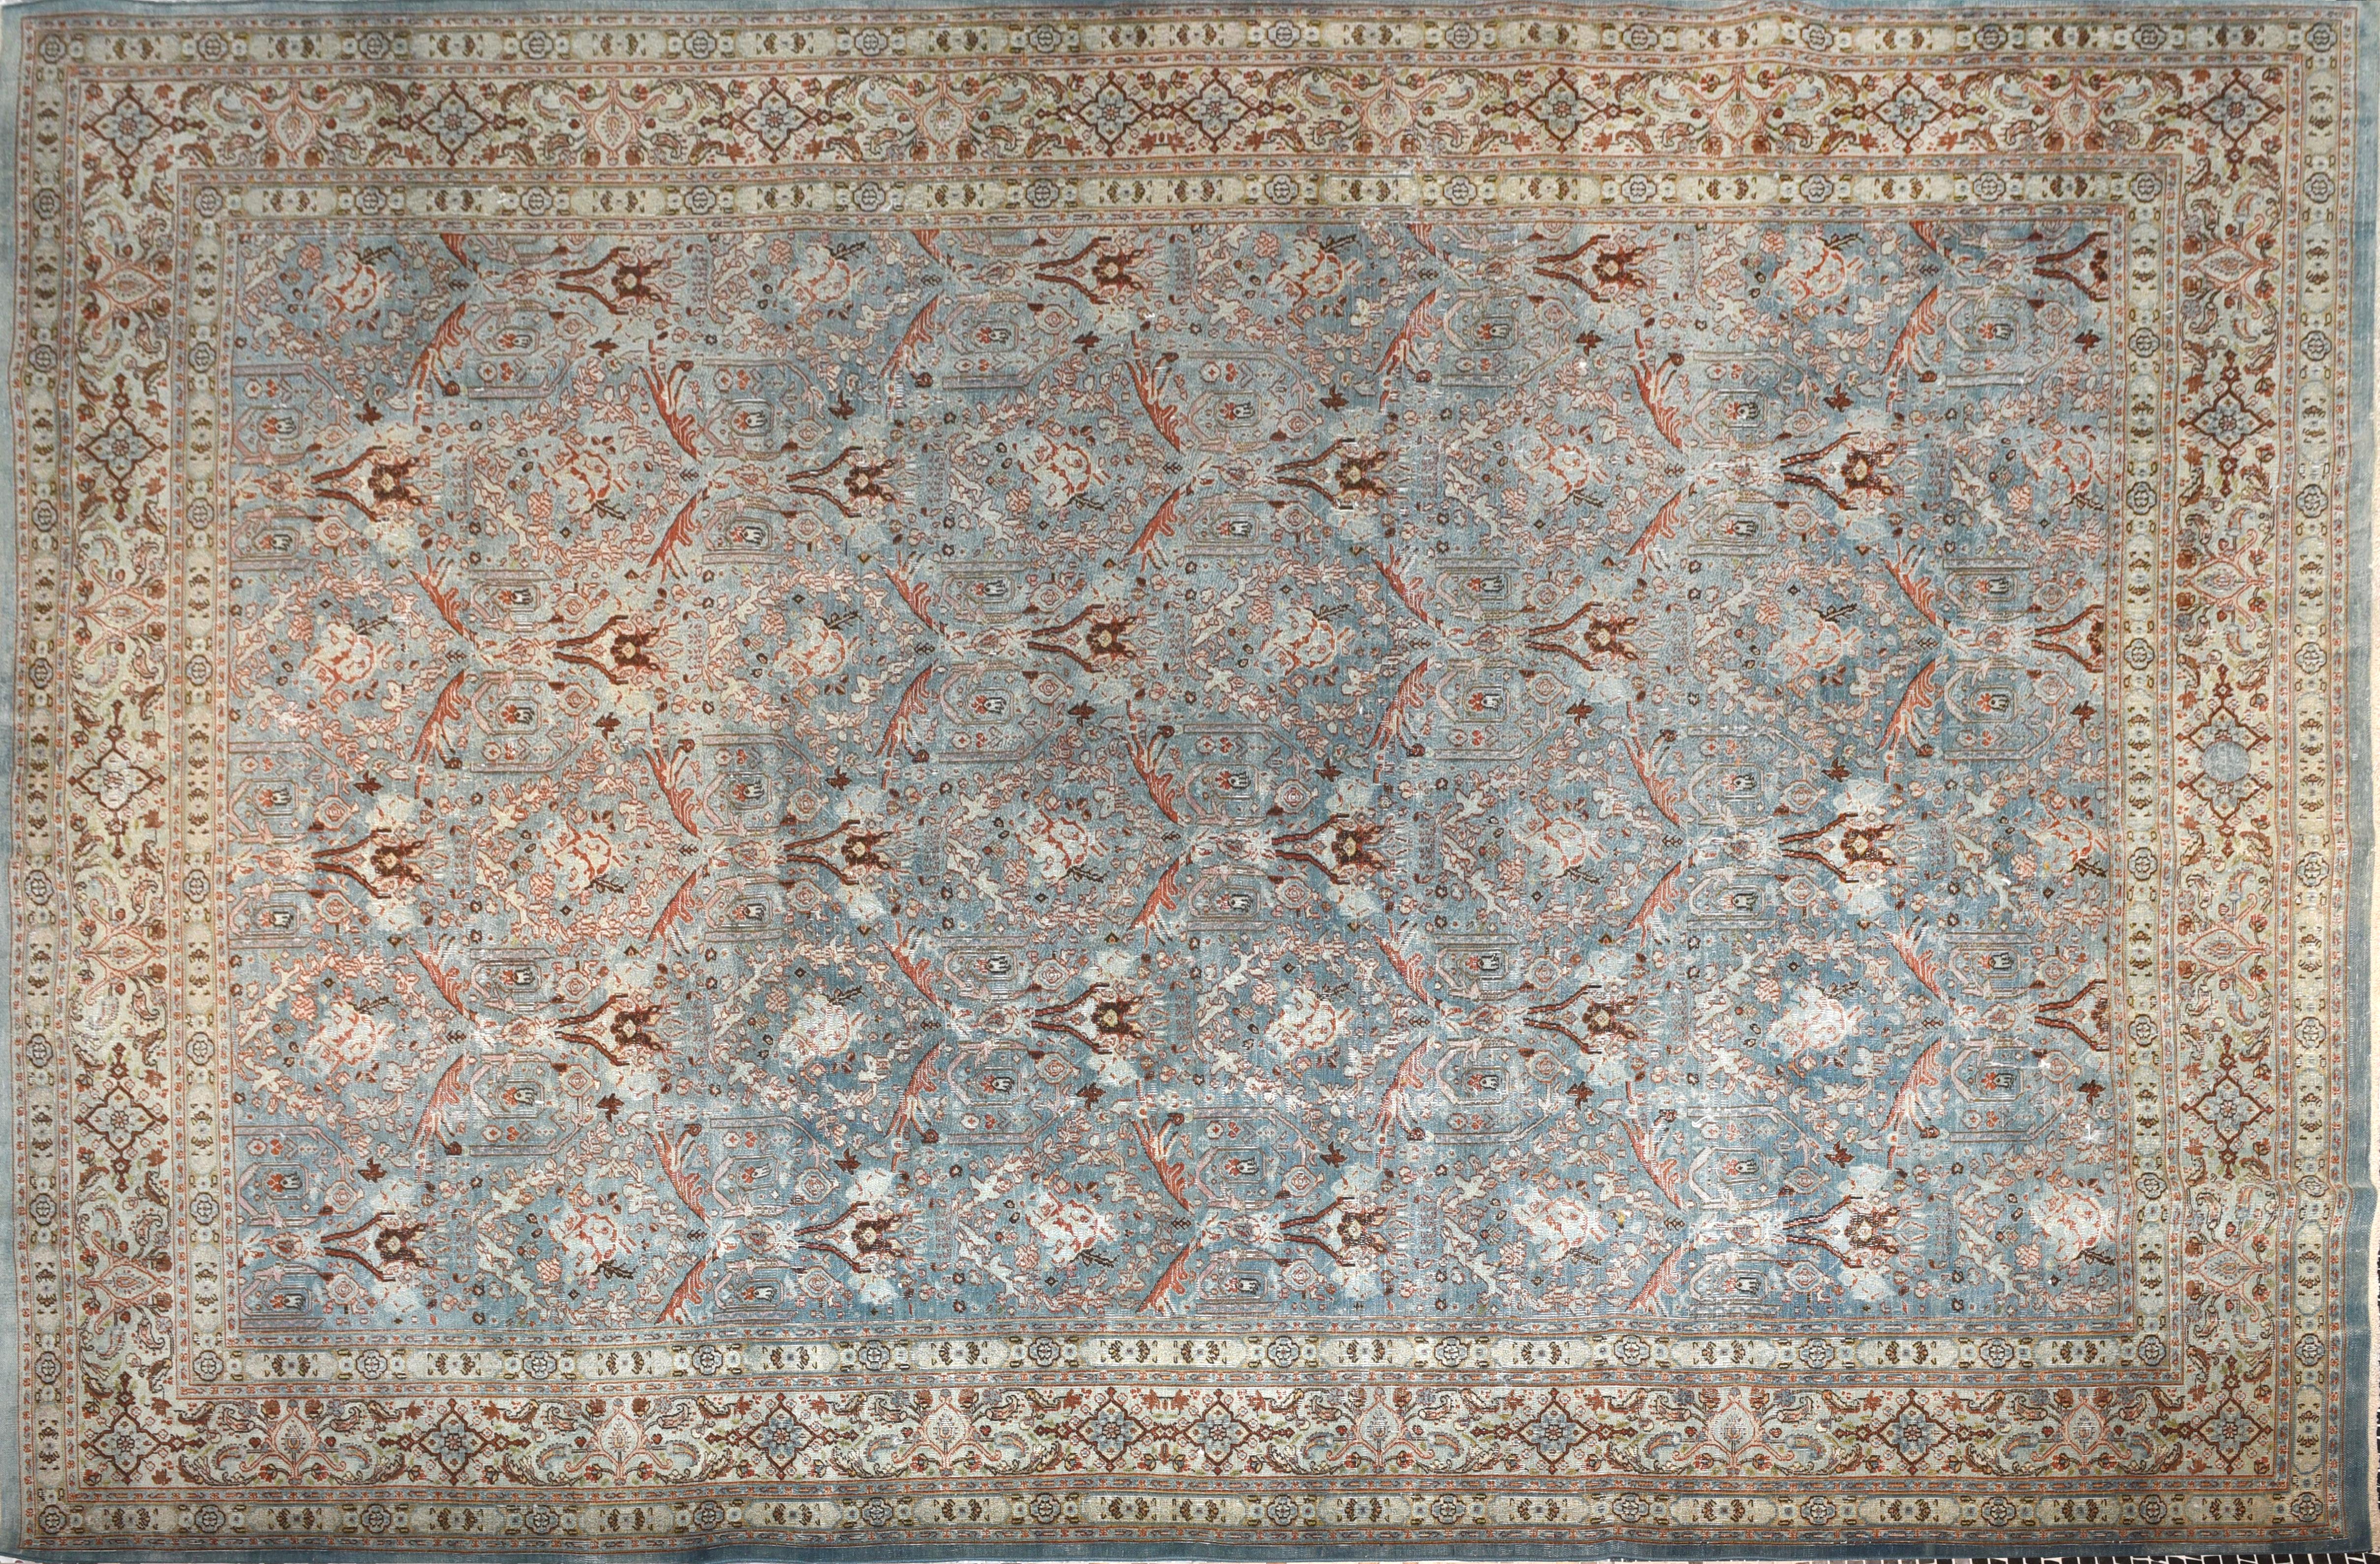 tabriz persian area rug